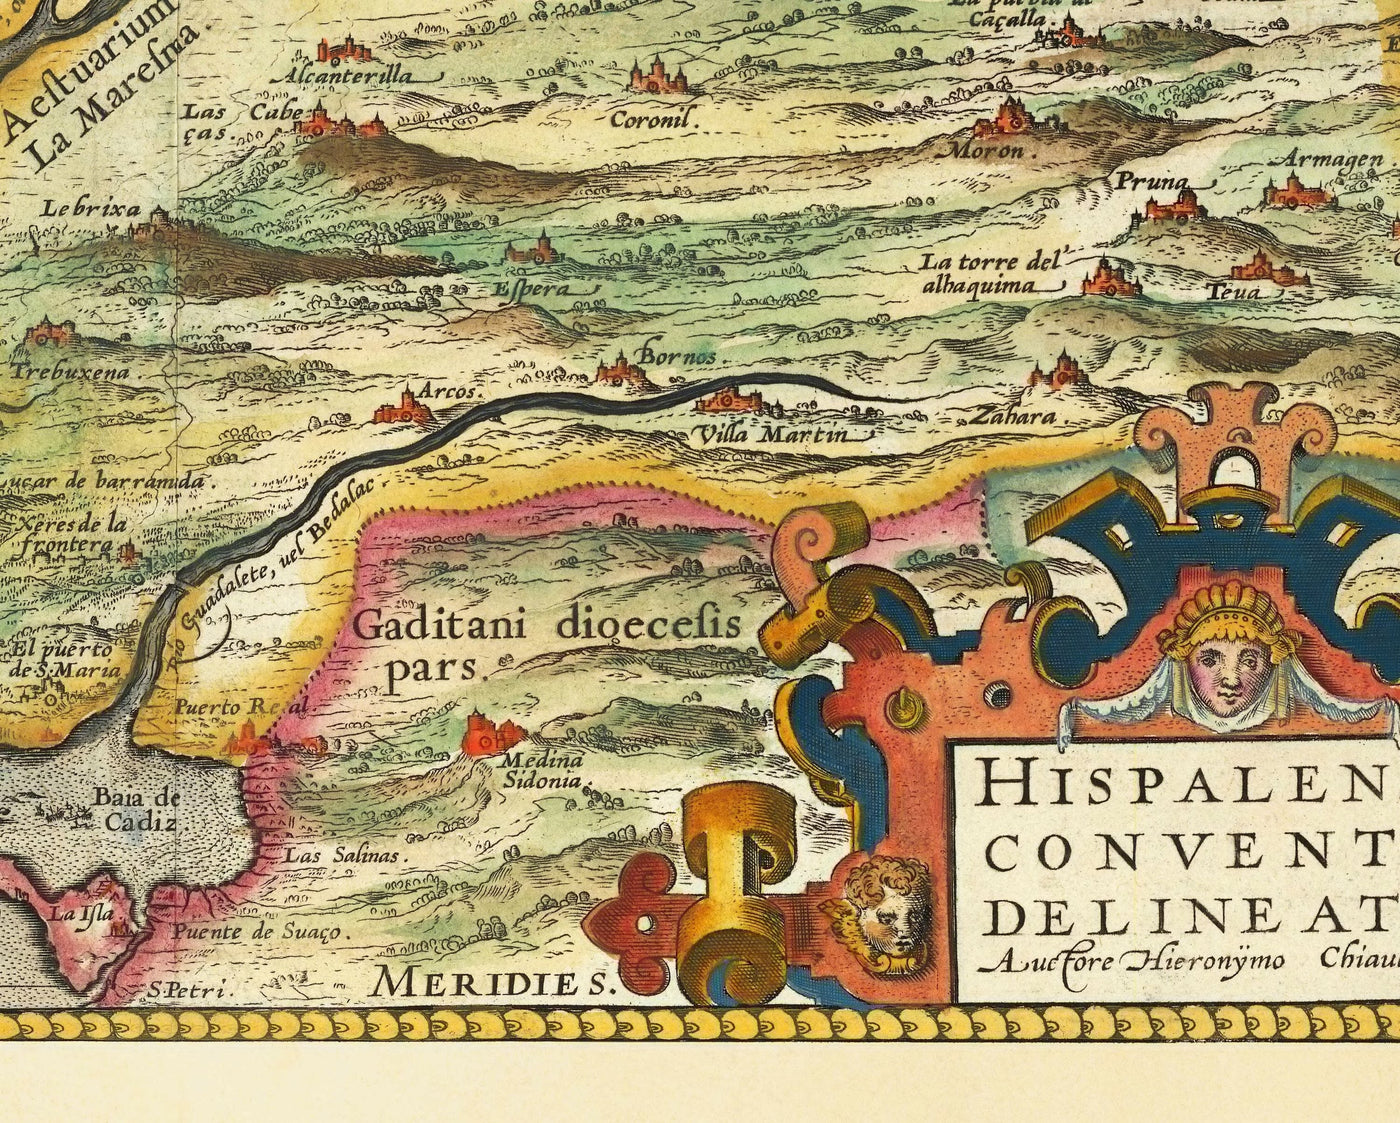 Ancienne carte d'Andalousie, Séville, Espagne par Ortelius en 1573 - Sevilla, Huelva, Cadiz, Barrameda, Santa María, Real